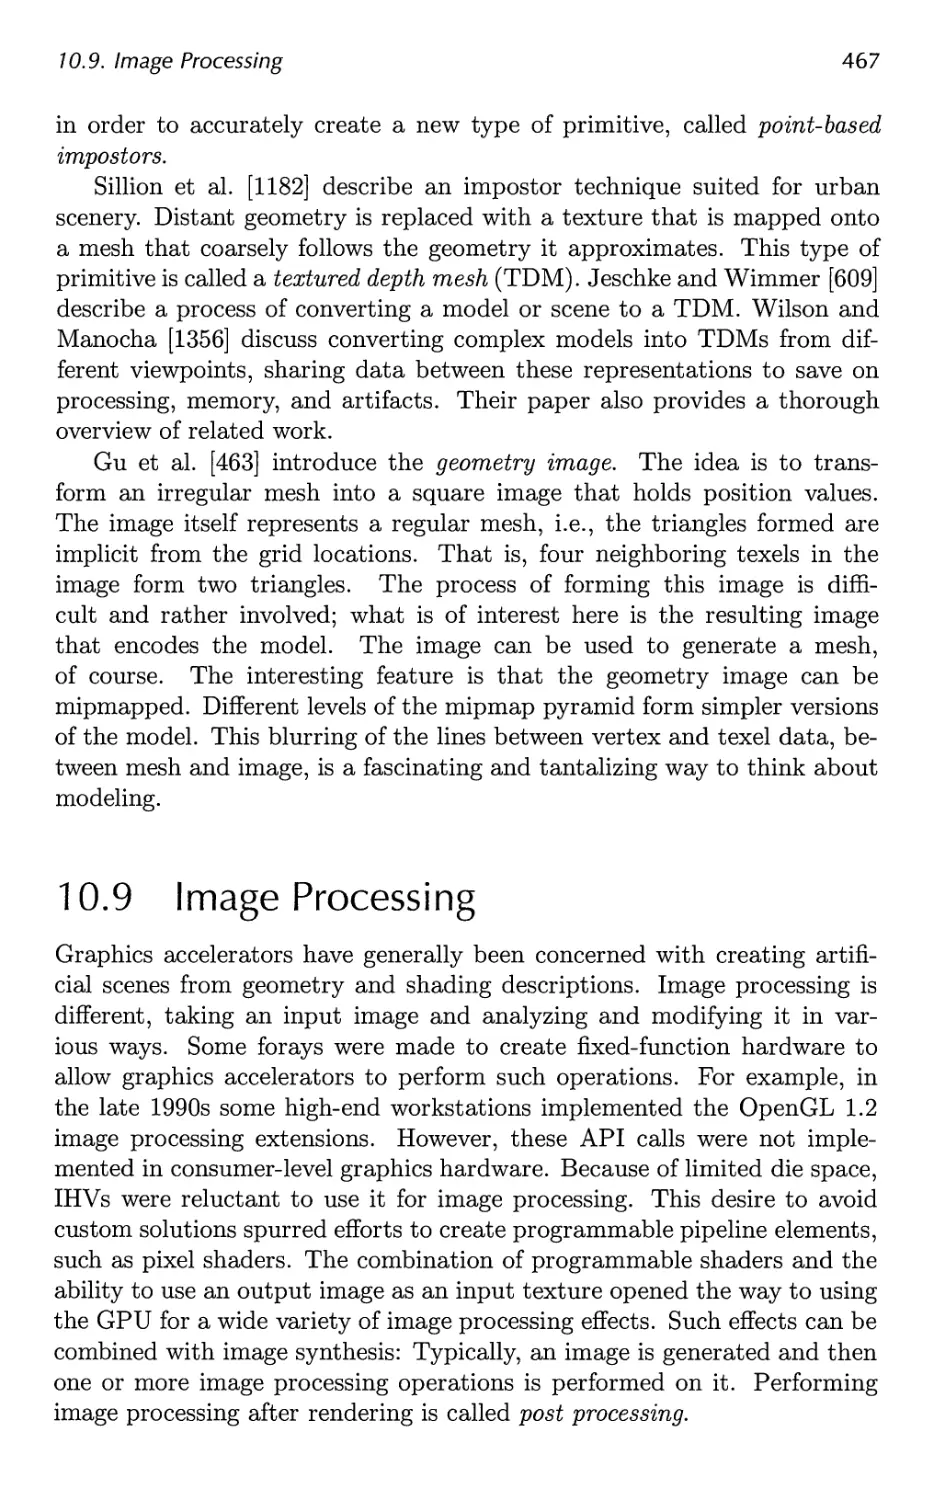 10.9 Image Processing